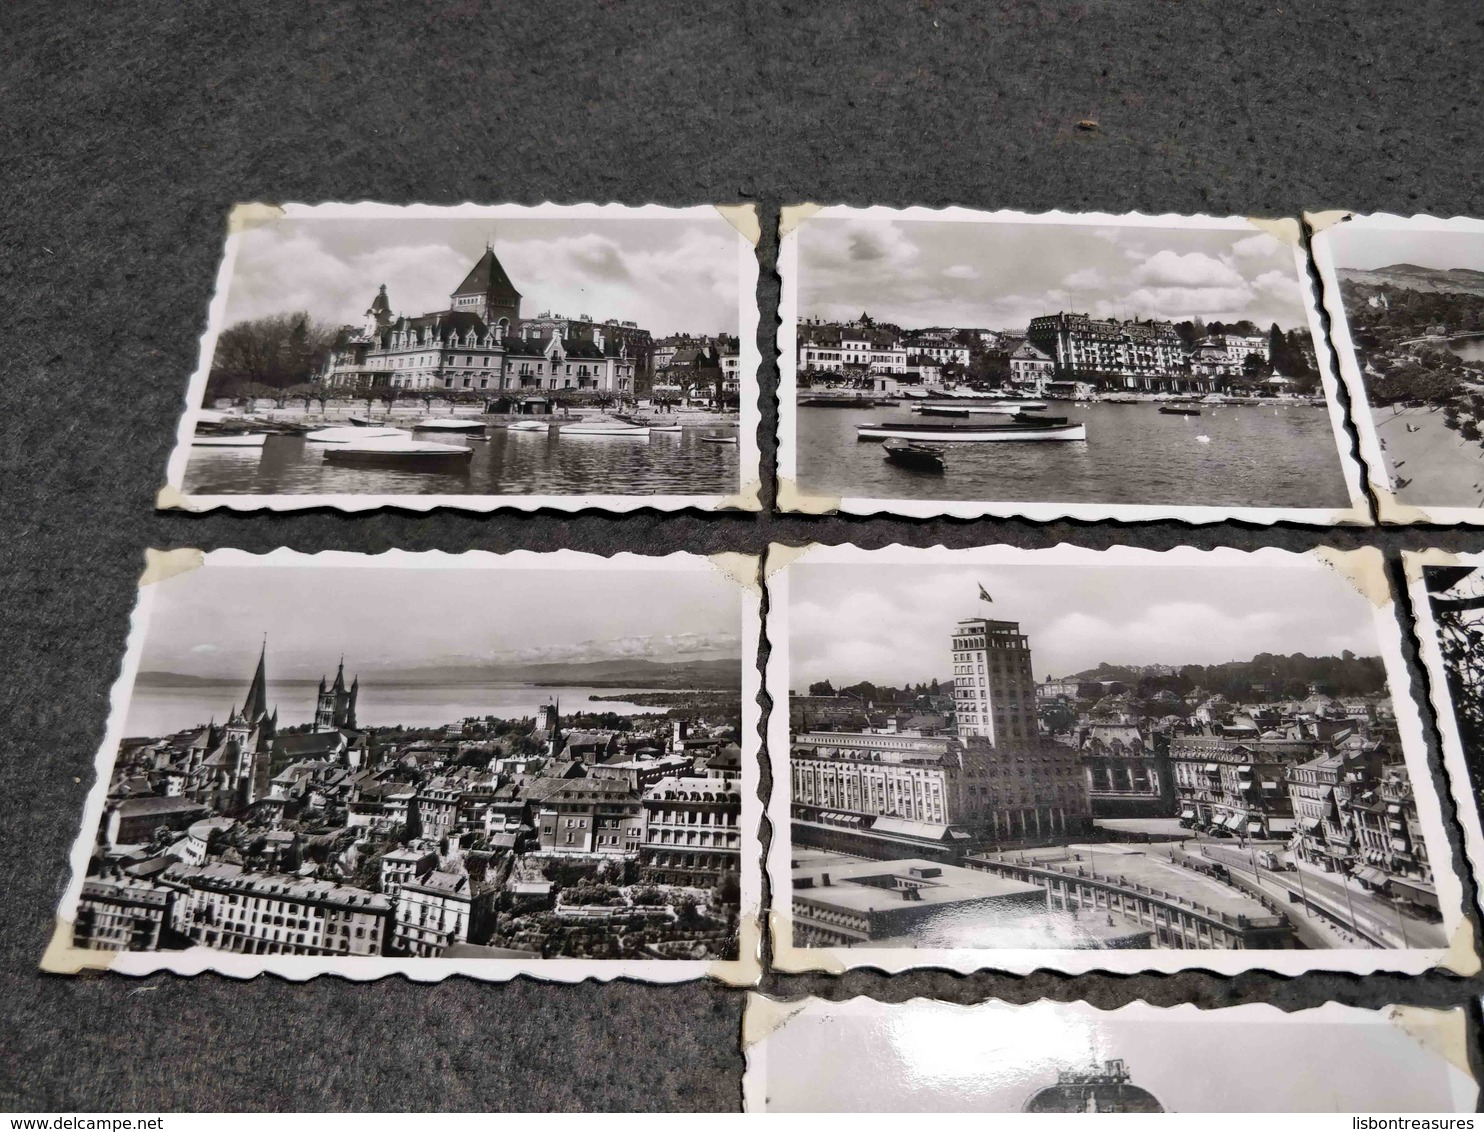 ANTIQUE LOT X 10 SMALL PHOTOS SWITZERLAND - LAUSANNE VIEWS - 35mm -16mm - 9,5+8+S8mm Film Rolls